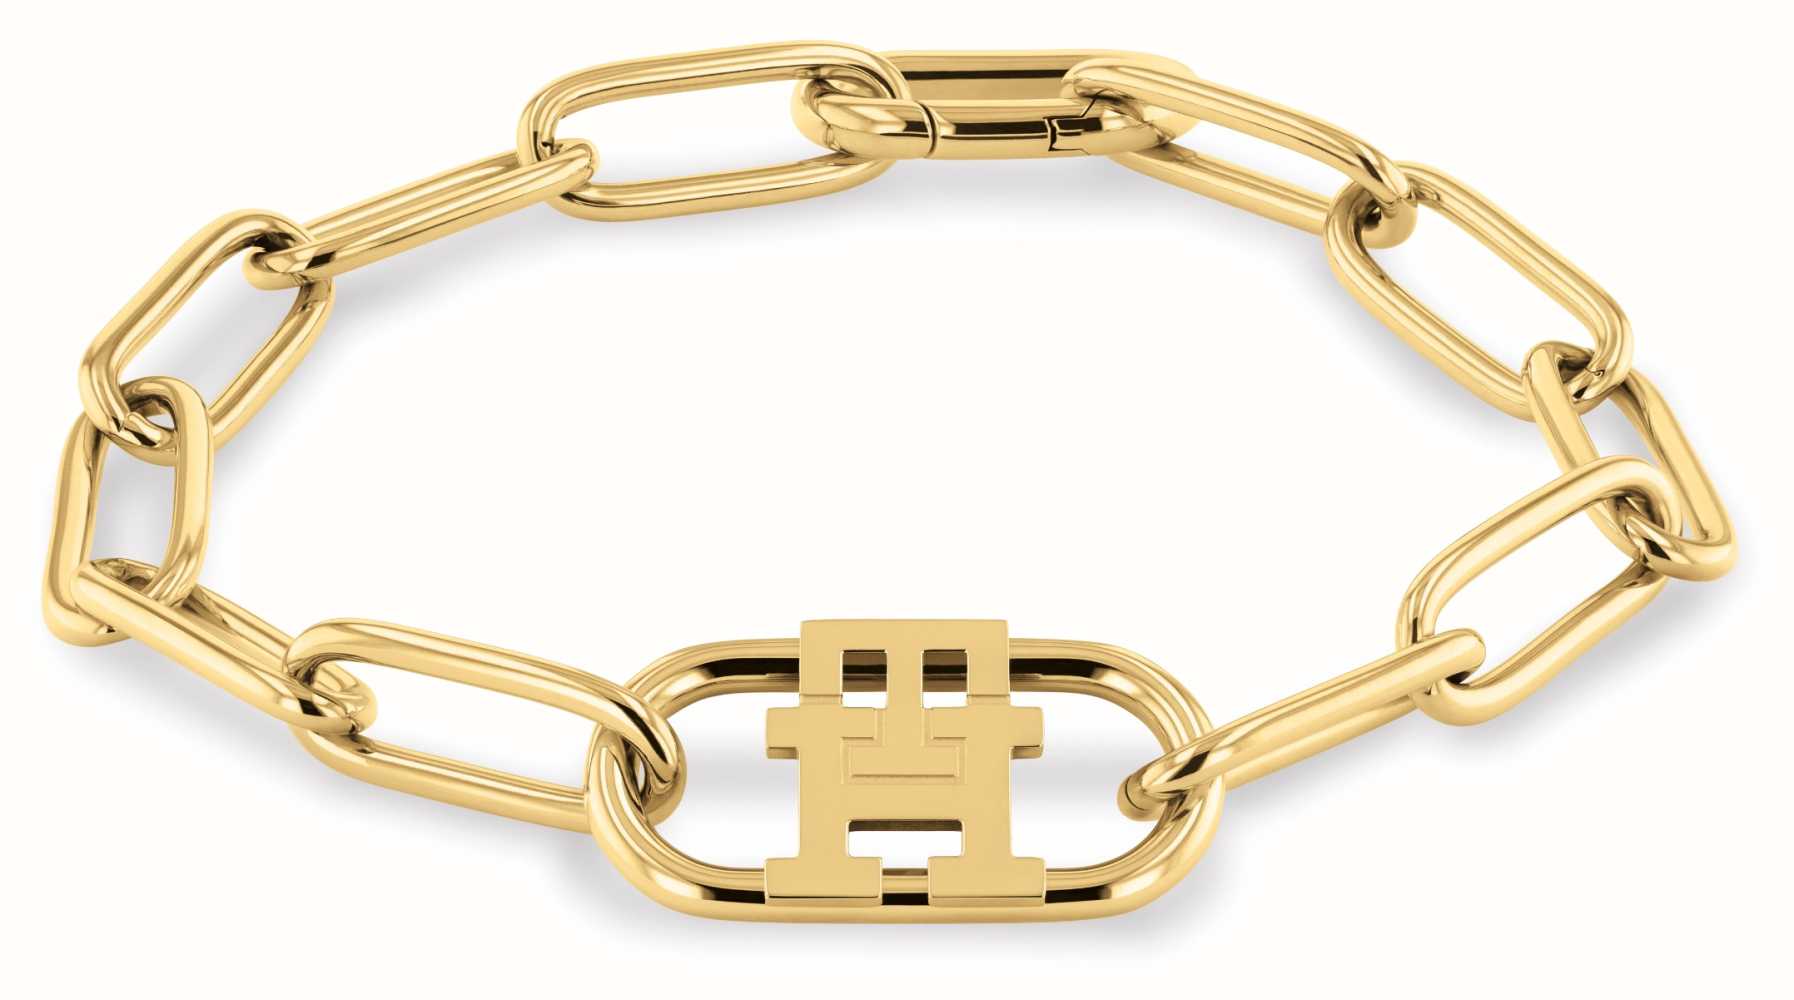 Tommy Hilfiger Gold Plated Contrast Link Chain Bracelet 2780788